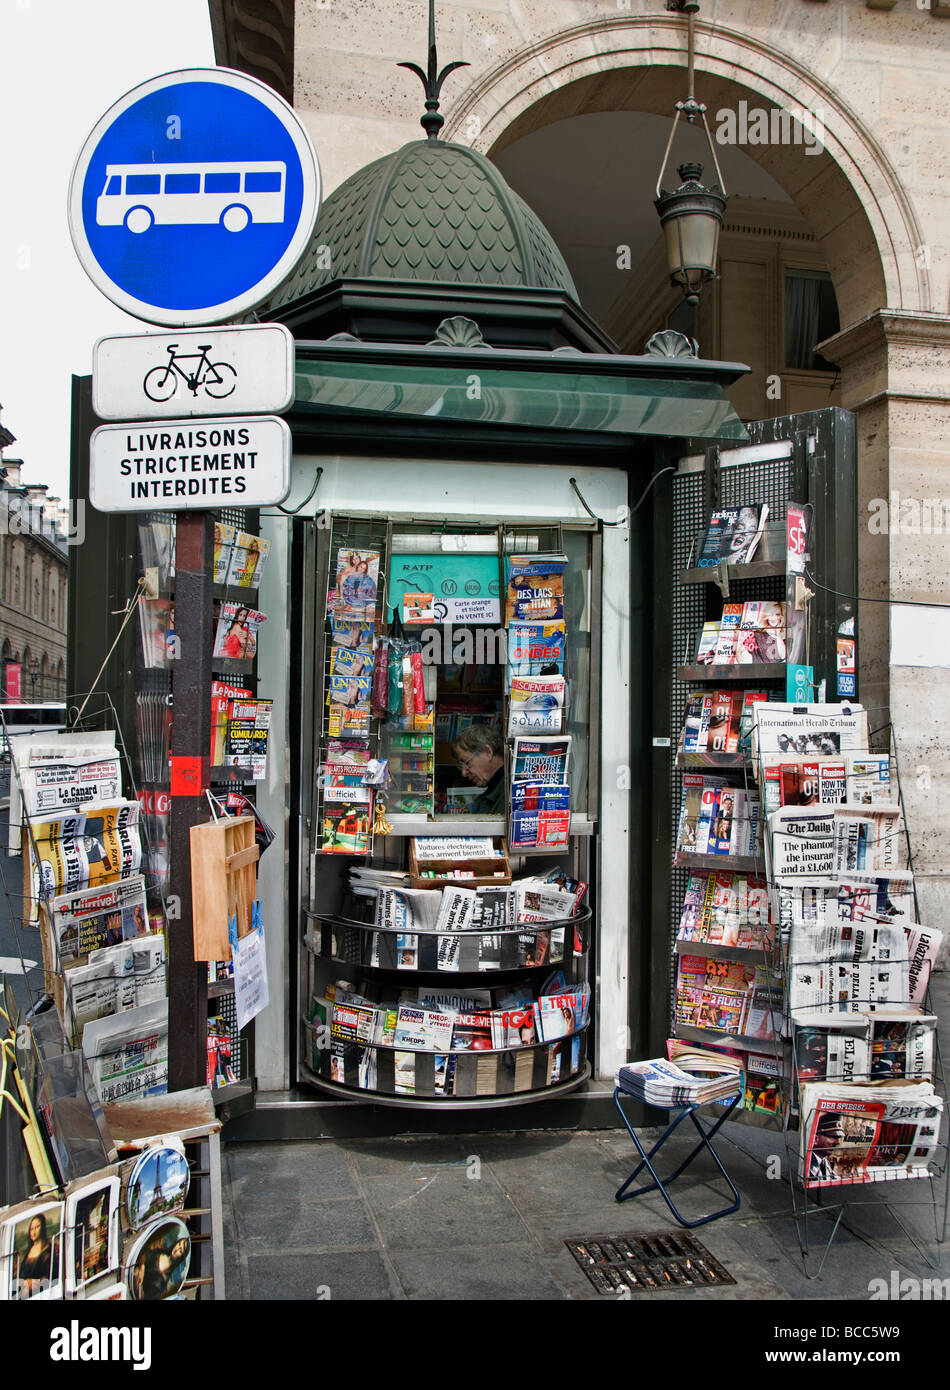 Place du Palais Royal Paris France newspaper news book Stock Photo